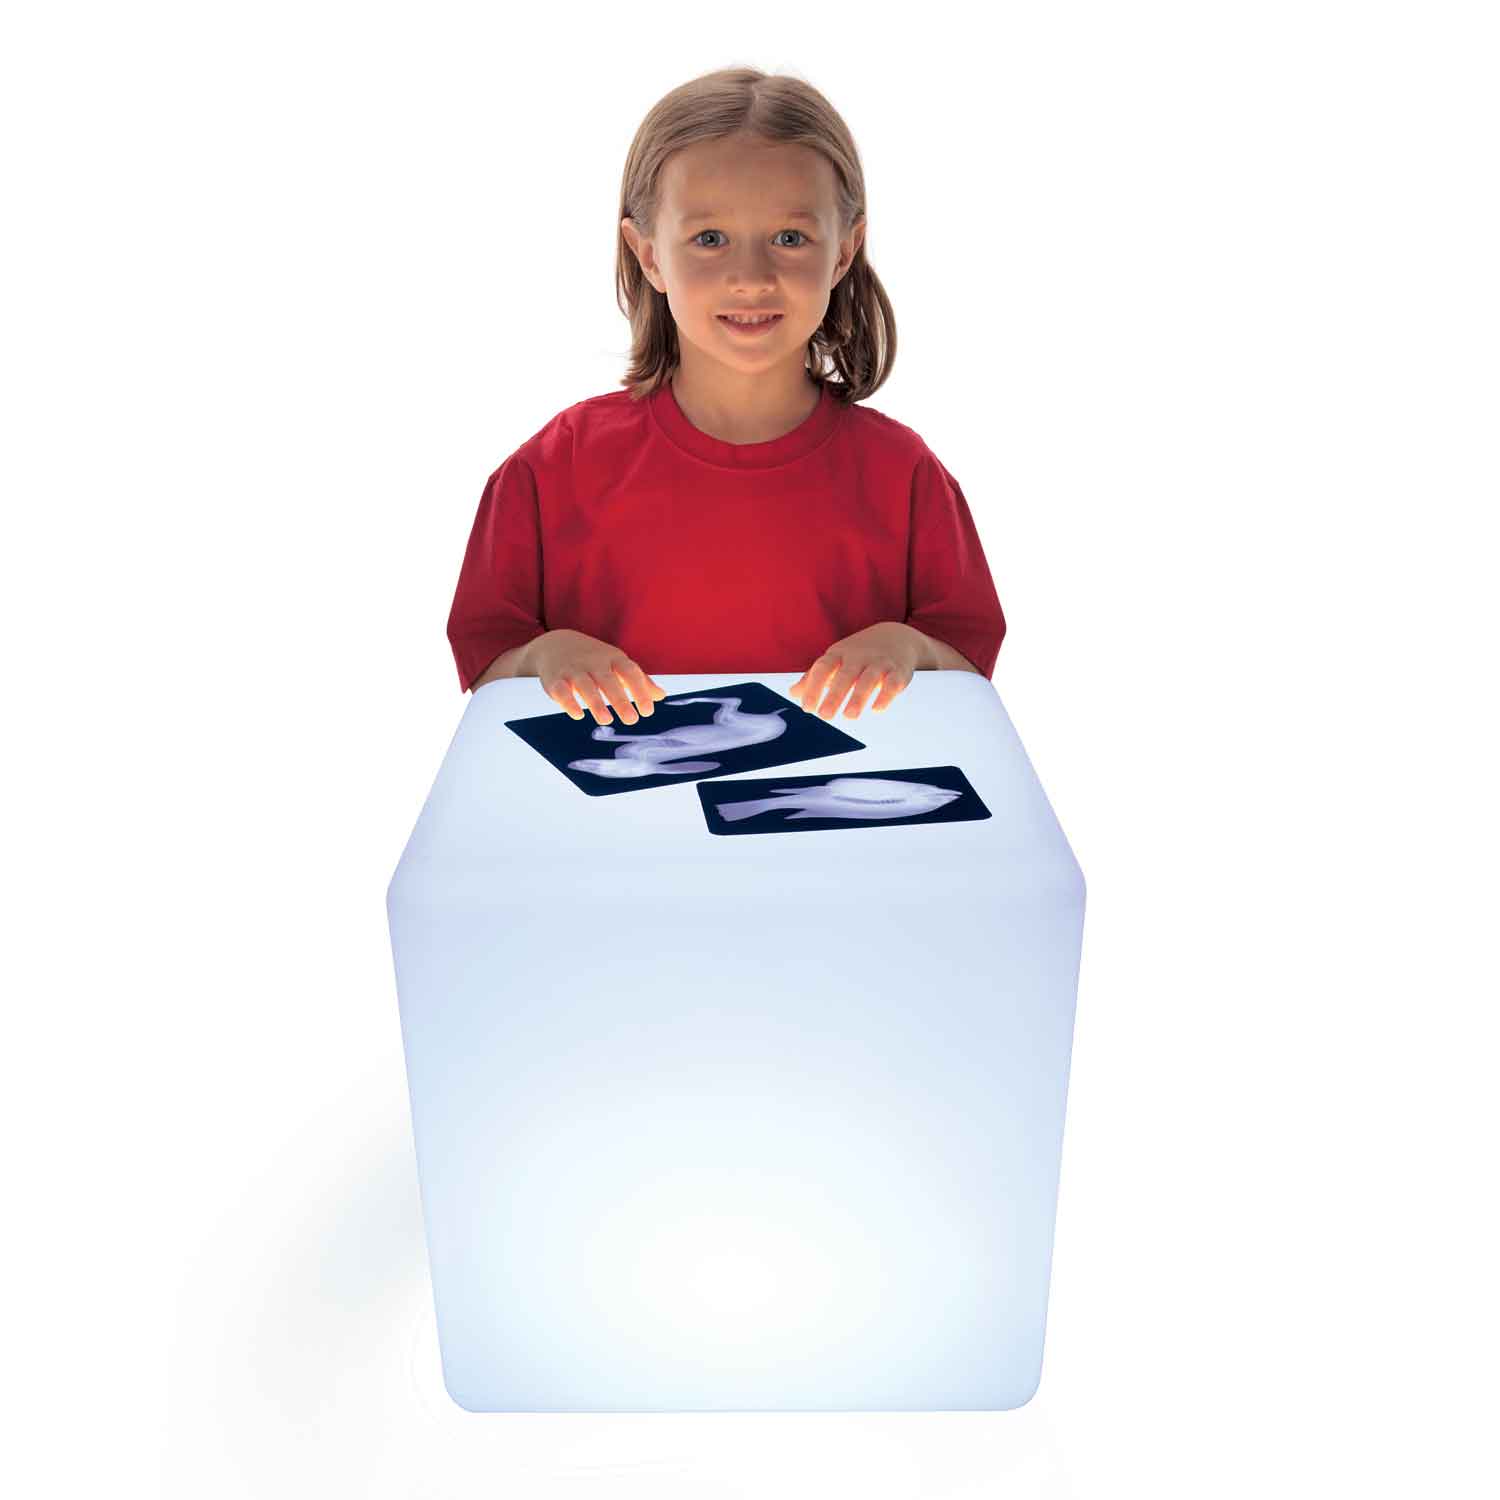 Educational Light Cube